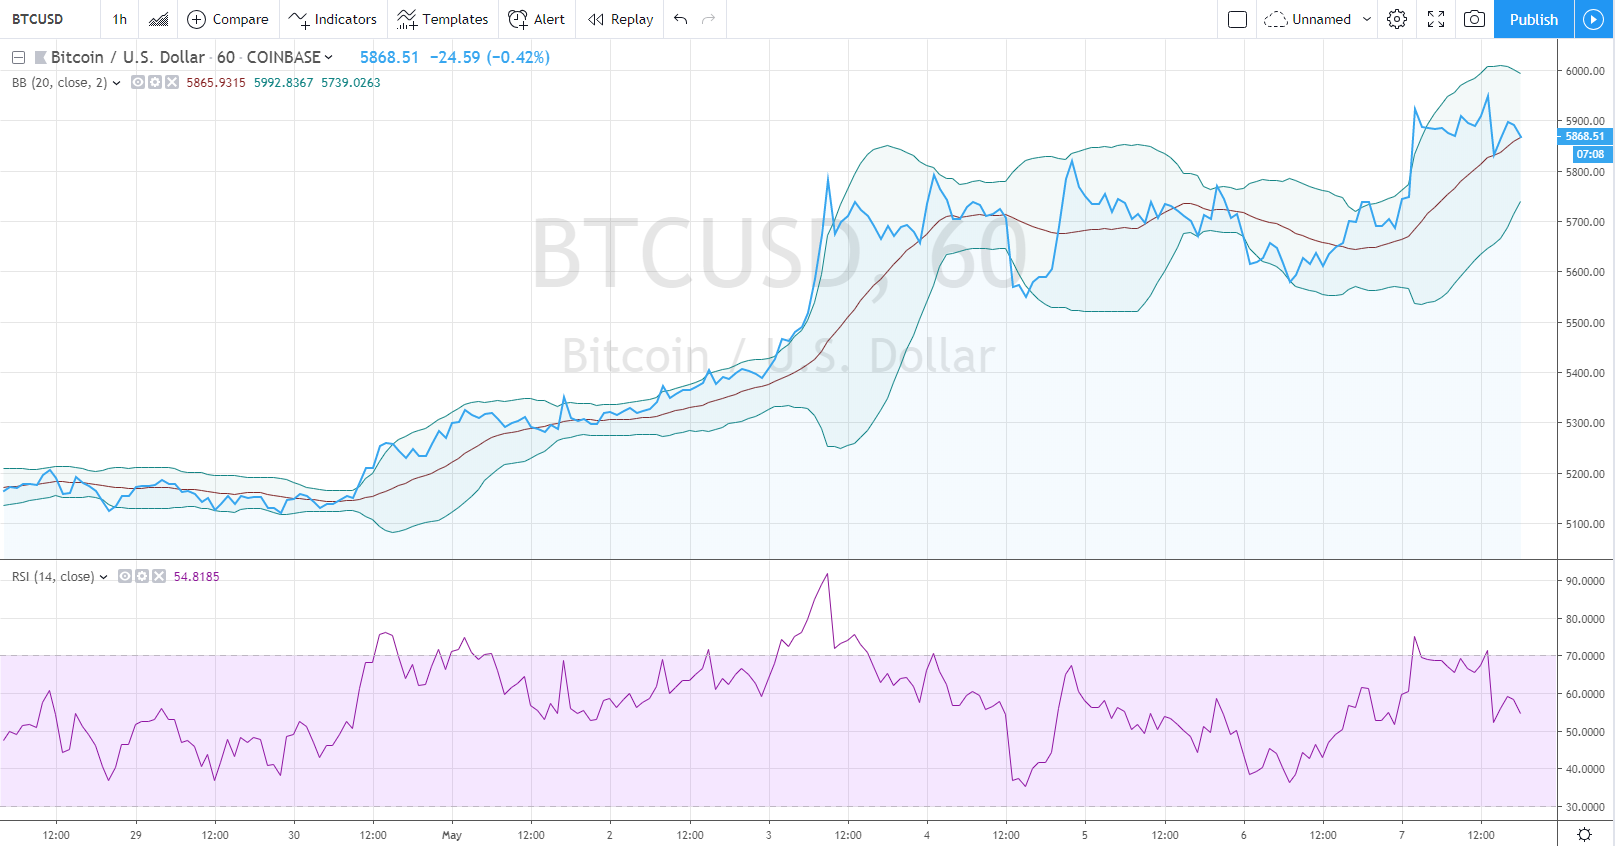 Bitcoin Price Analysis May 7th 2019